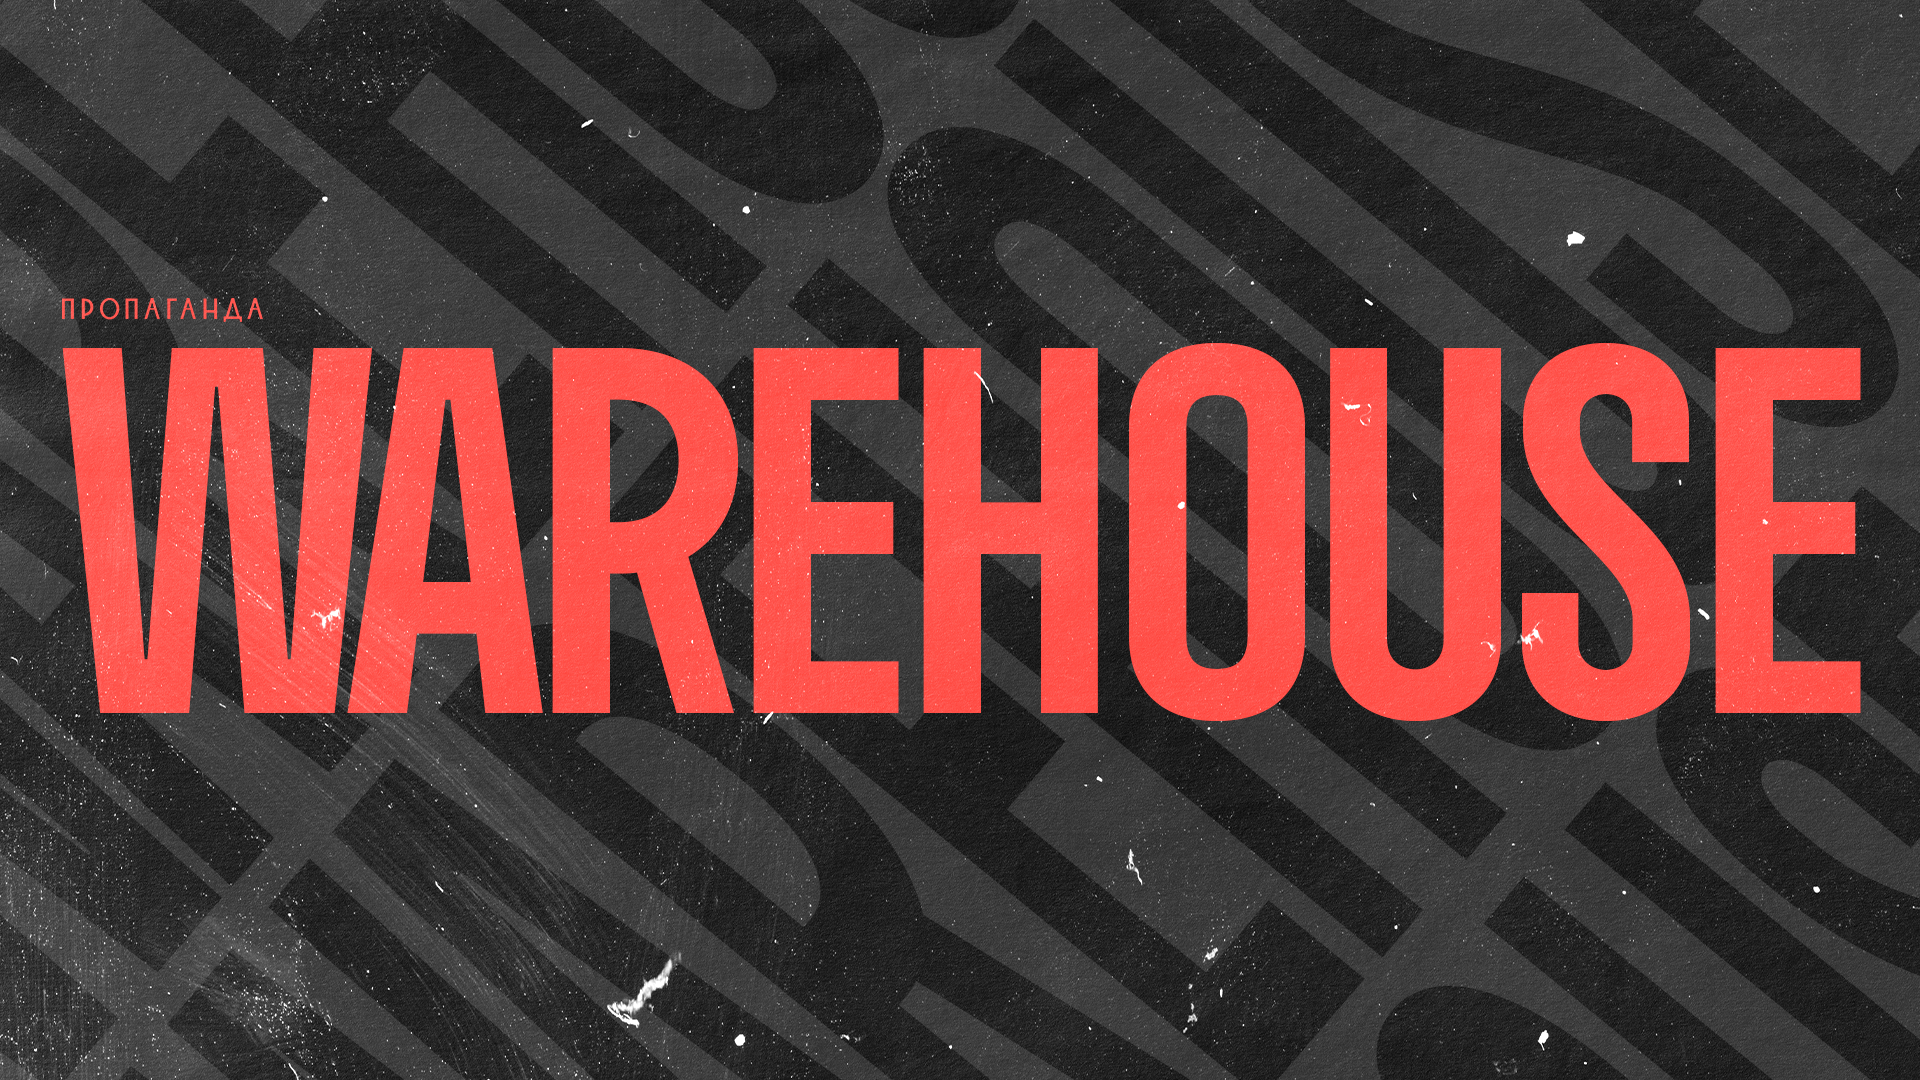 warehouse 13 logo